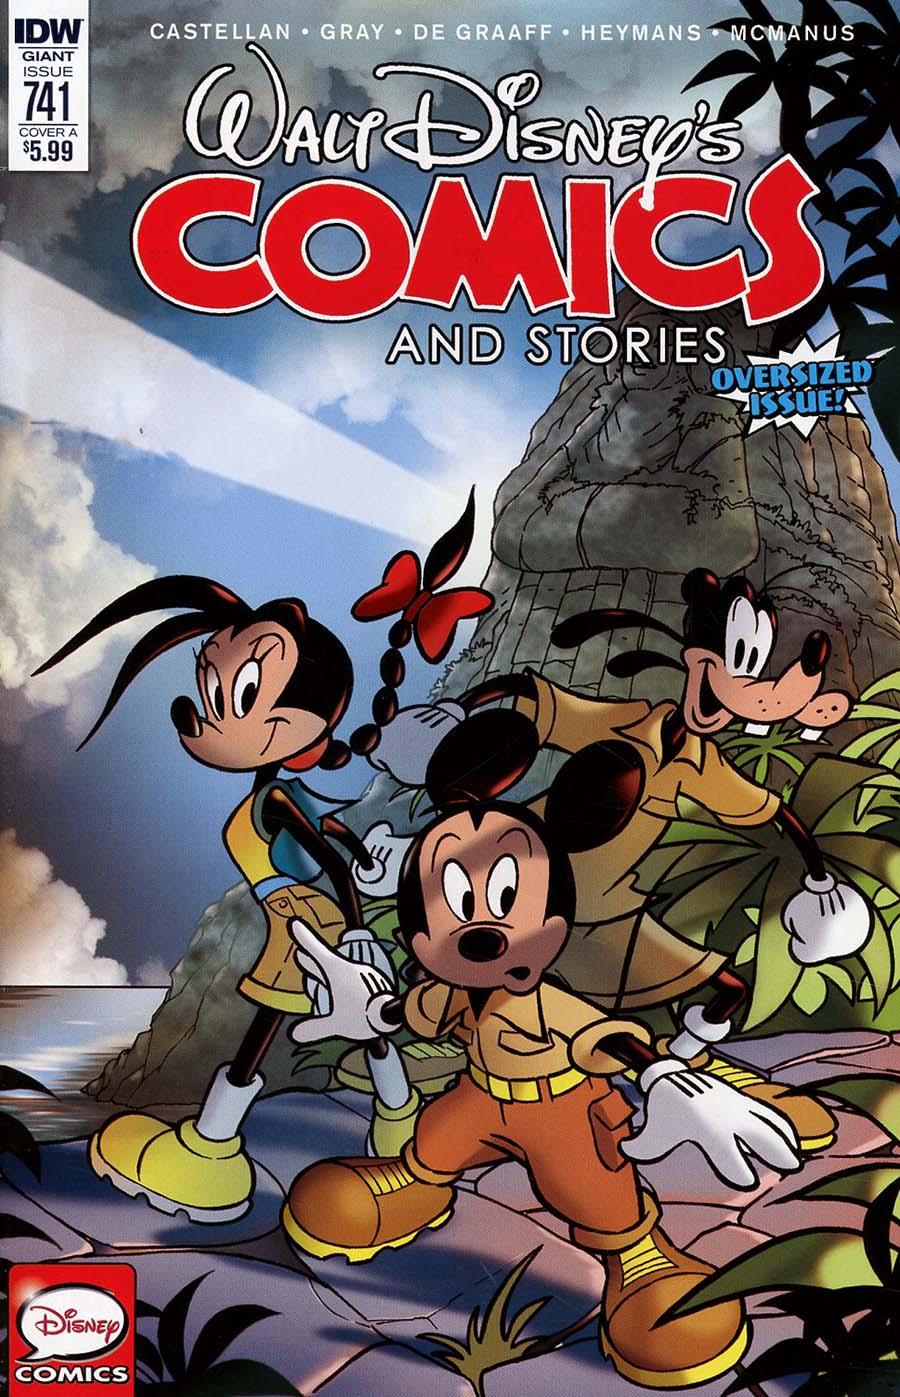 Walt Disneys Comics & Stories Vol. 1 #741